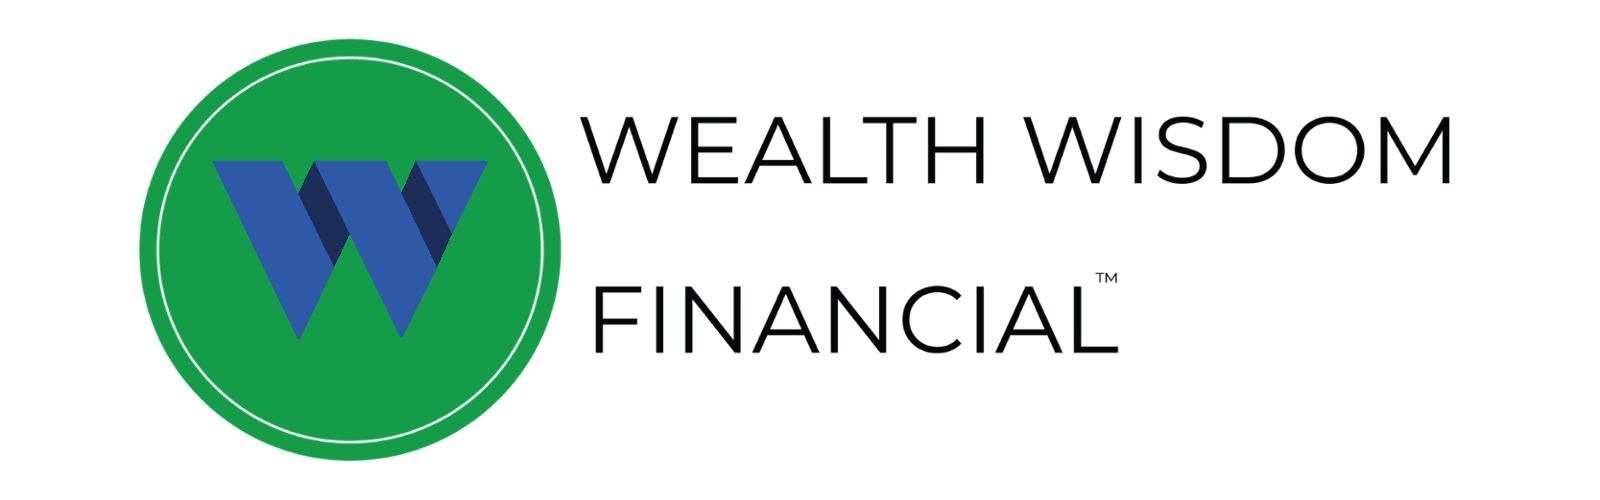 Wealth Wisdom Financial